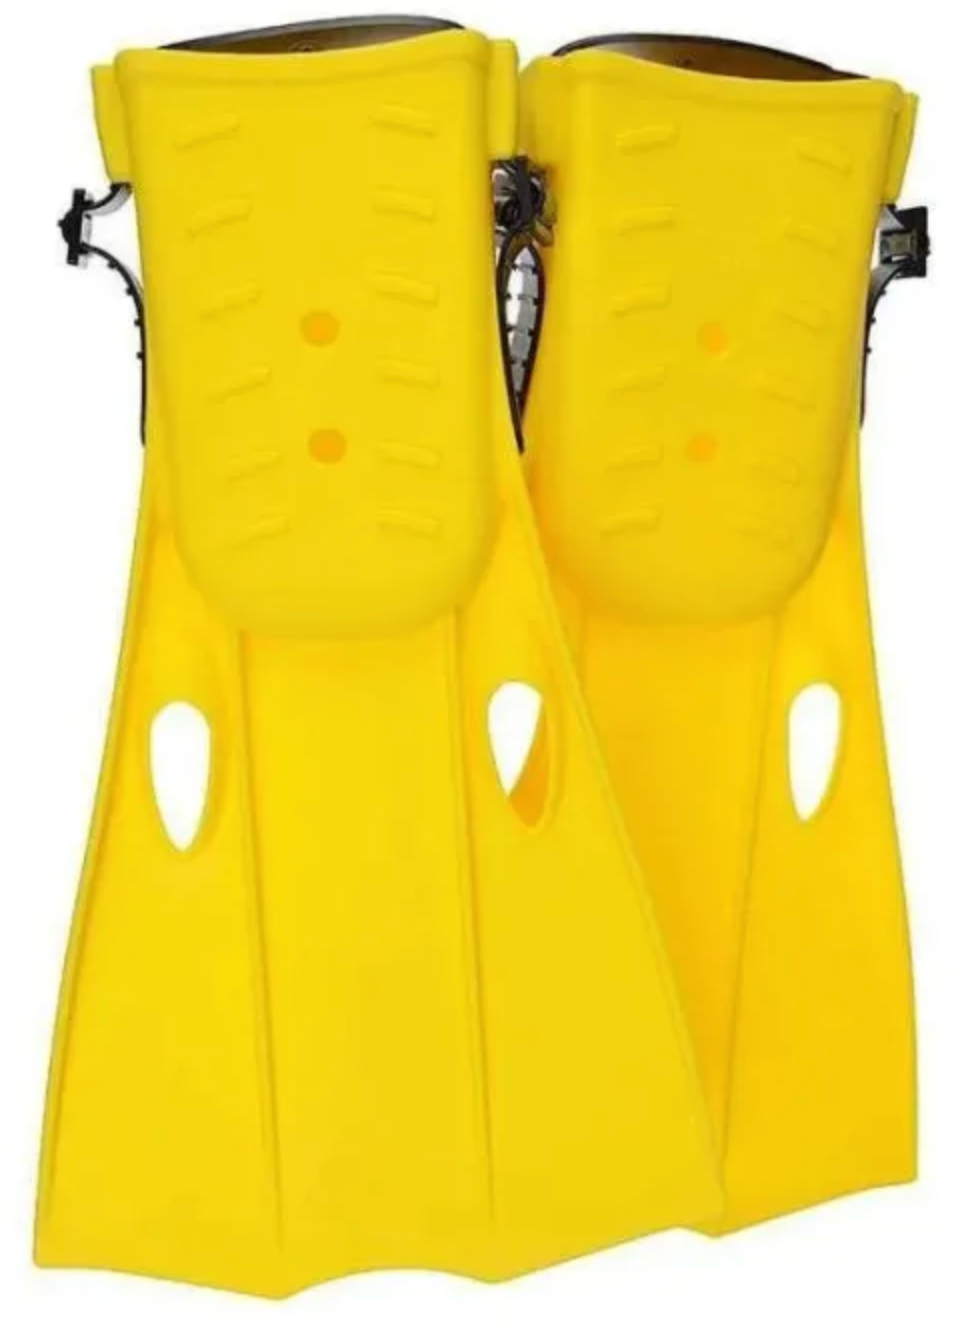 Ласты детские для плавания, желтые ласты, 38-40 размер